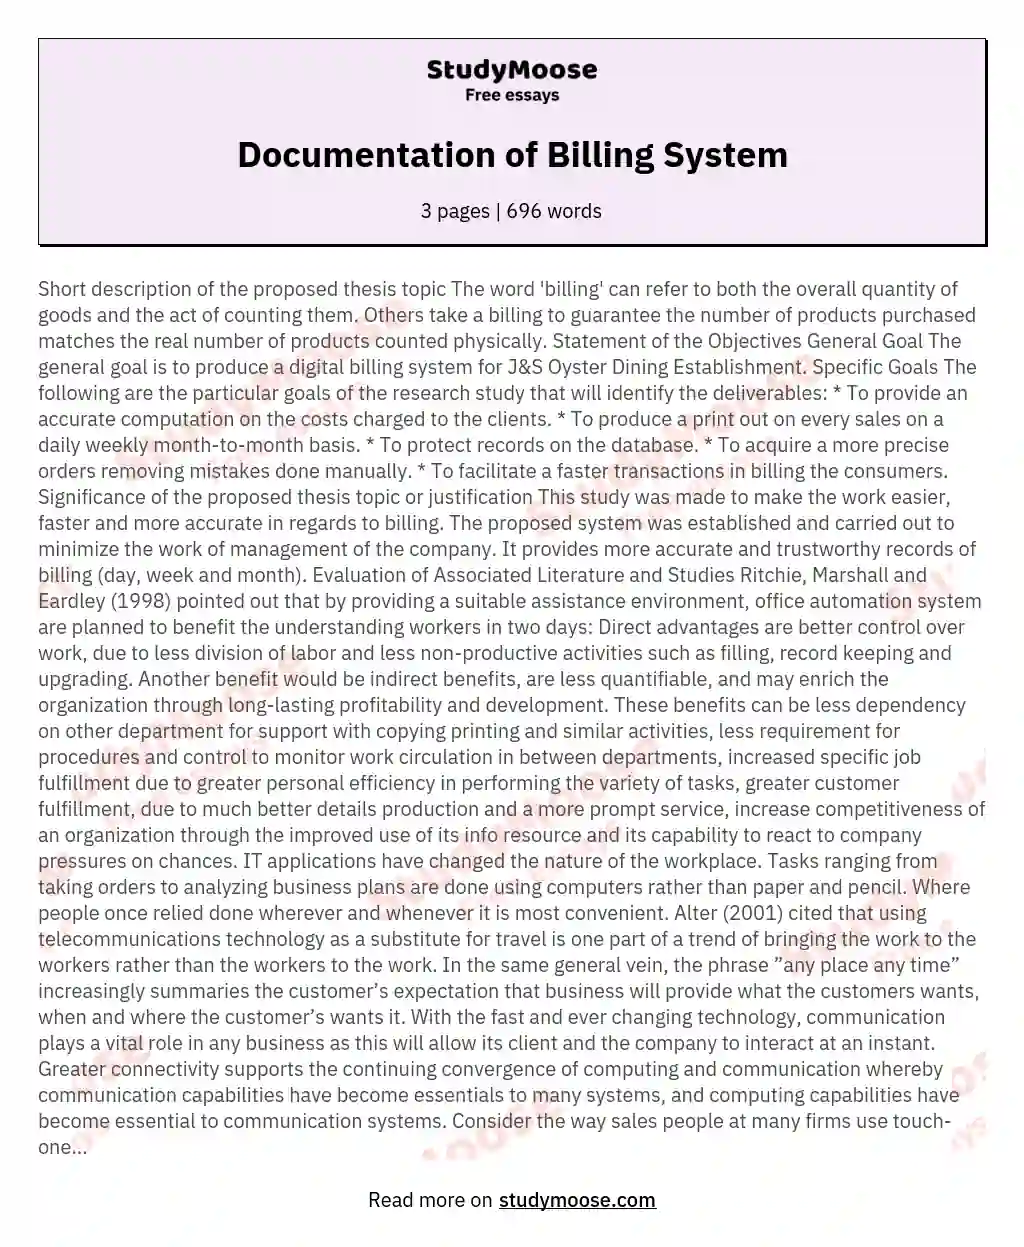 Documentation of Billing System essay